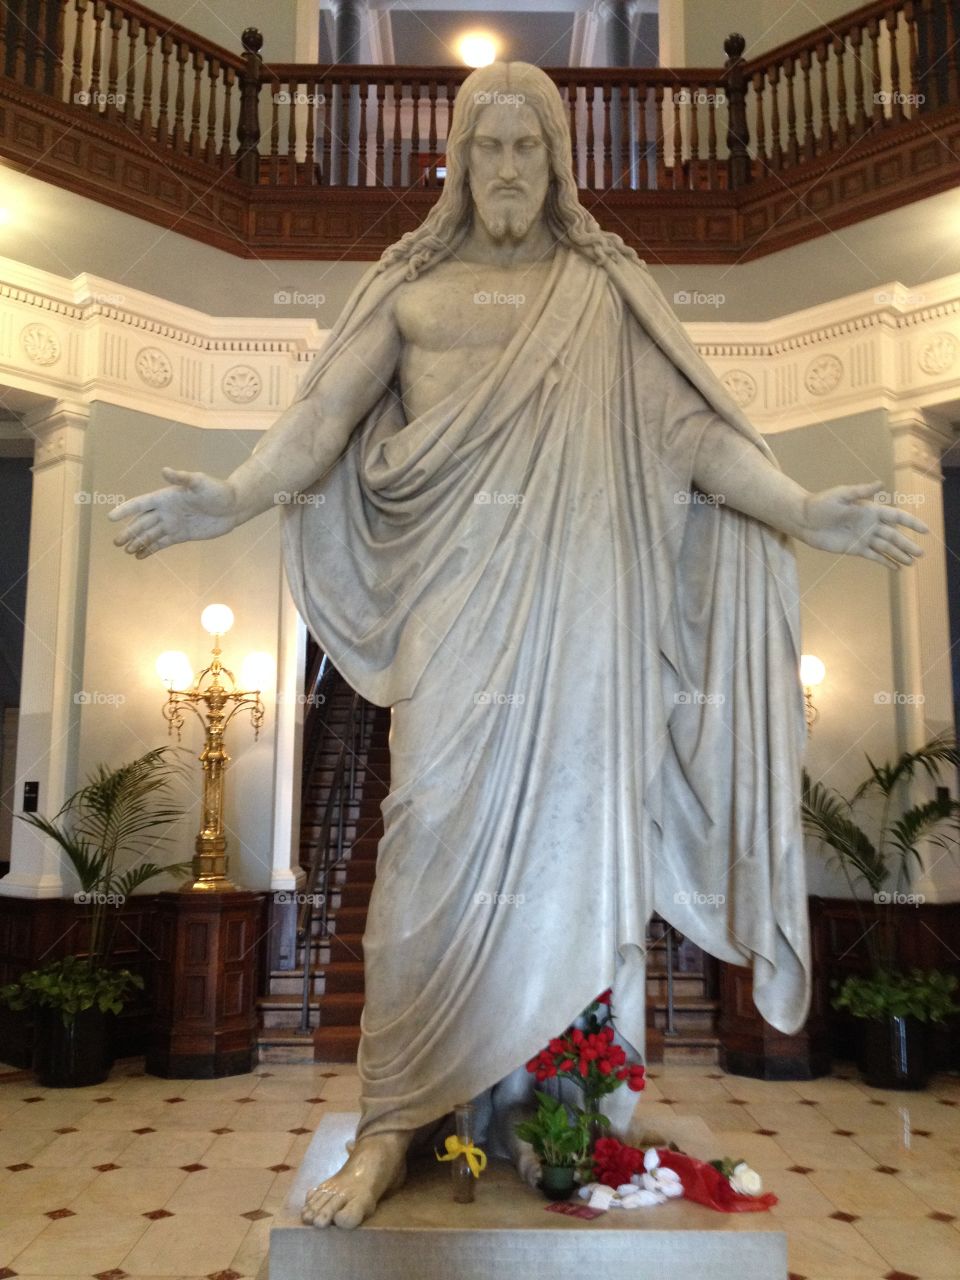 Prayerful statue of Jesus